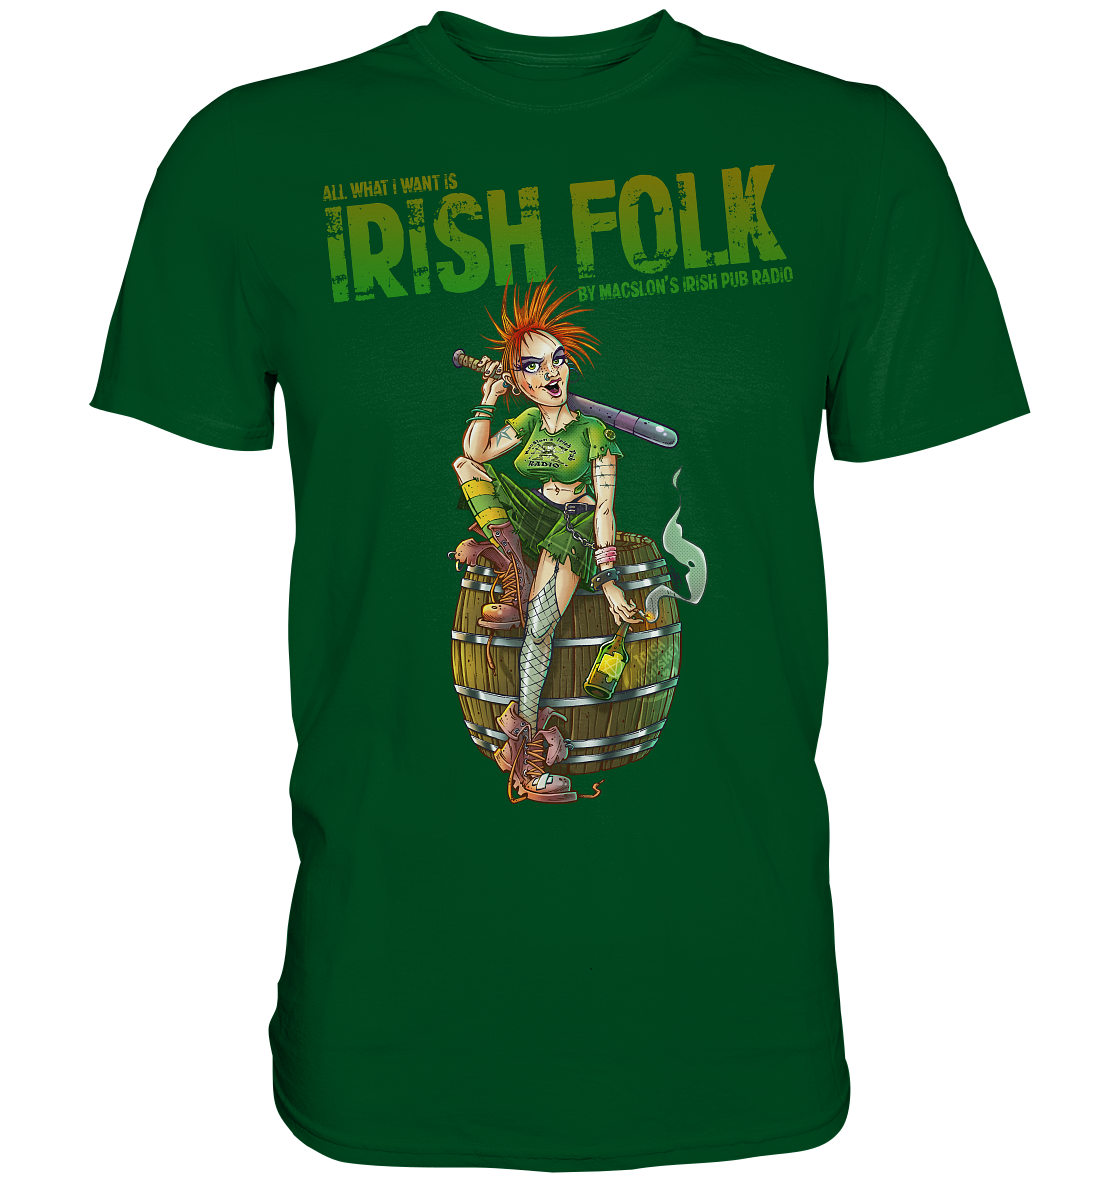 All What I Want Is "Irish Folk"  - Premium Shirt